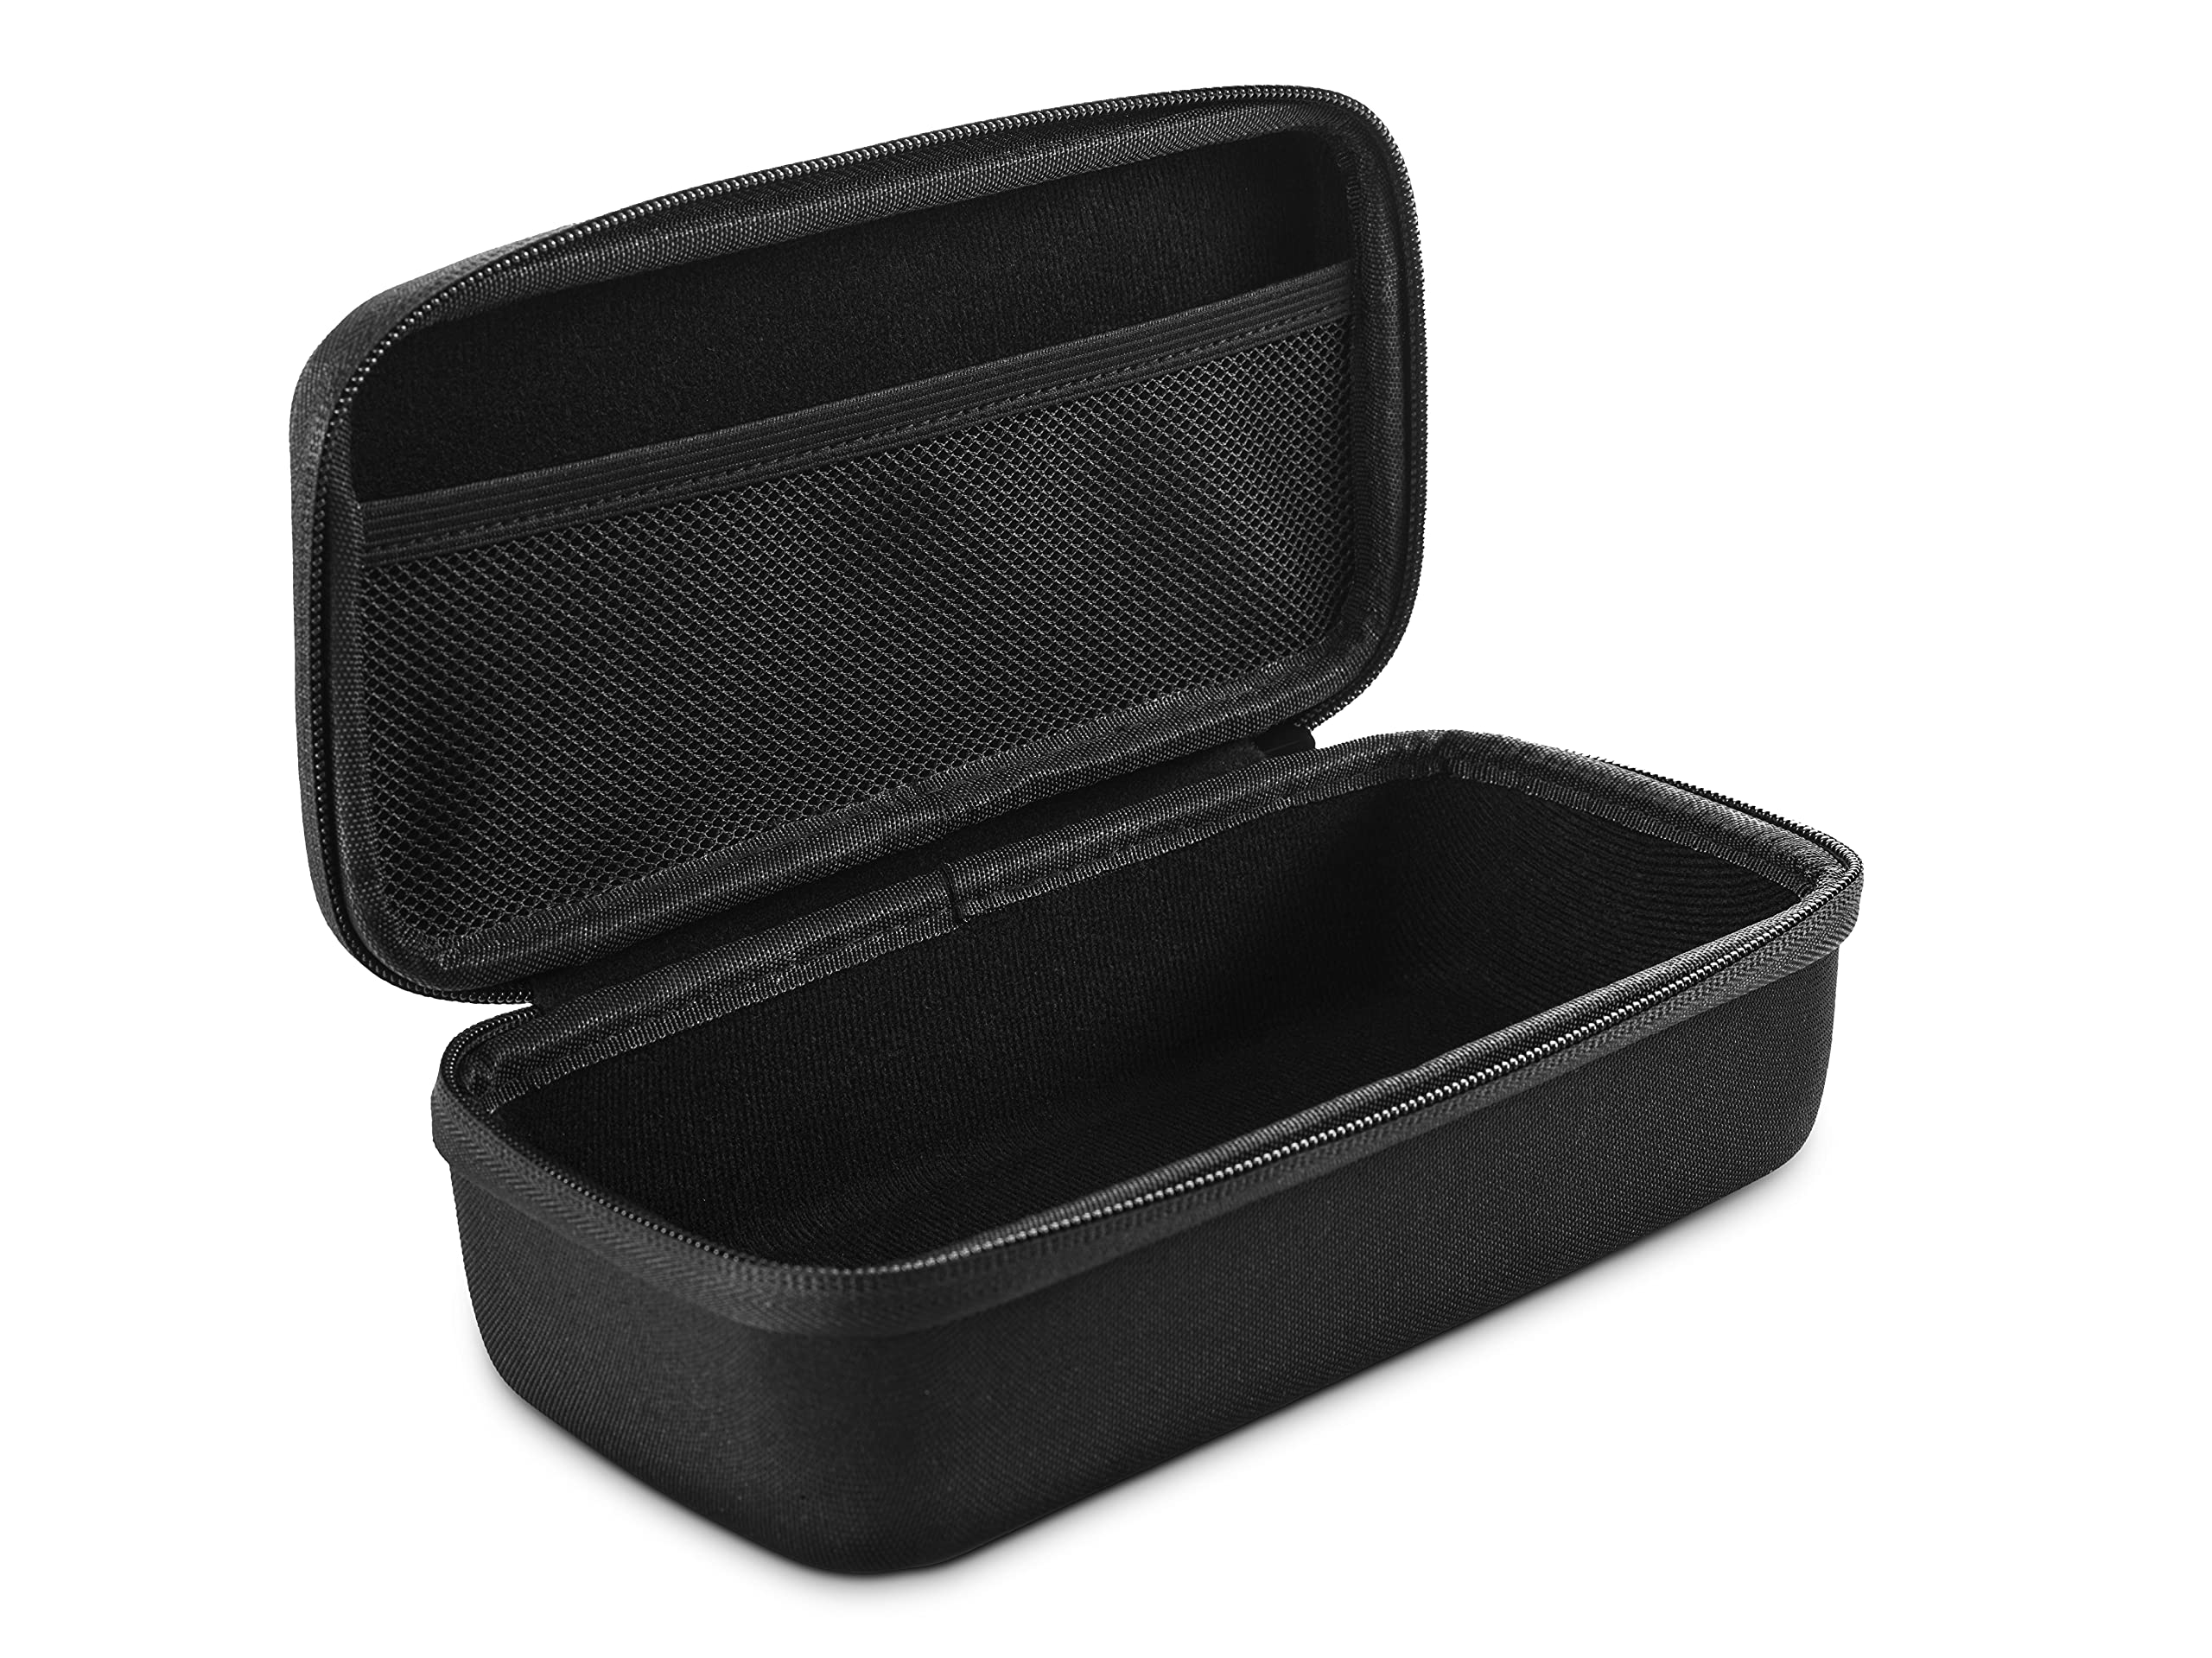 GoPro HERO12 Black + Accessories Bundle, Includes Handler + Head Strap 2.0 + Enduro Battery + Carrying Case